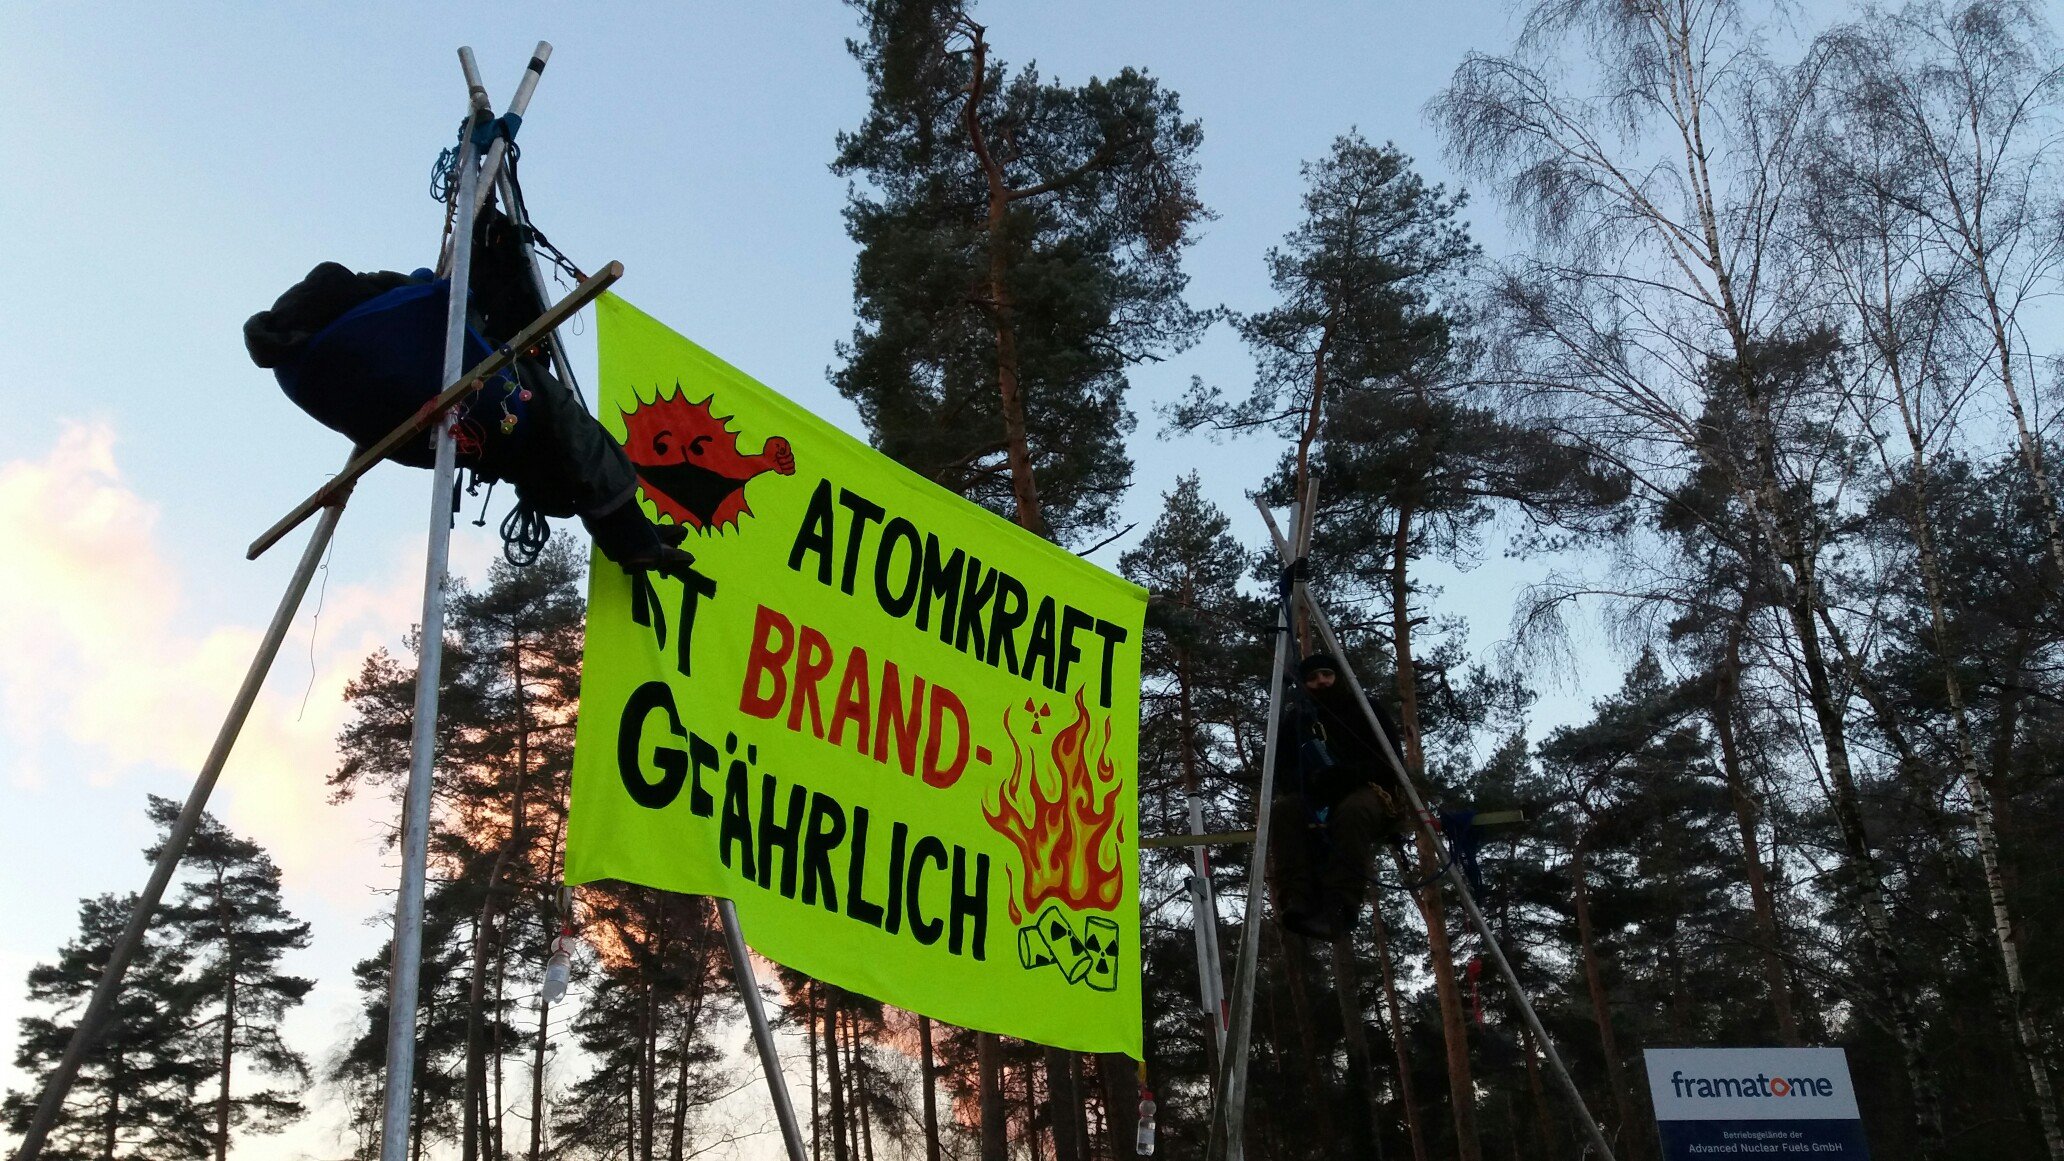 Blockade der Brennelementefabrik in Lingen (Transparent zwischen Bäumen), 21.01.2019. Foto: ContrAtom